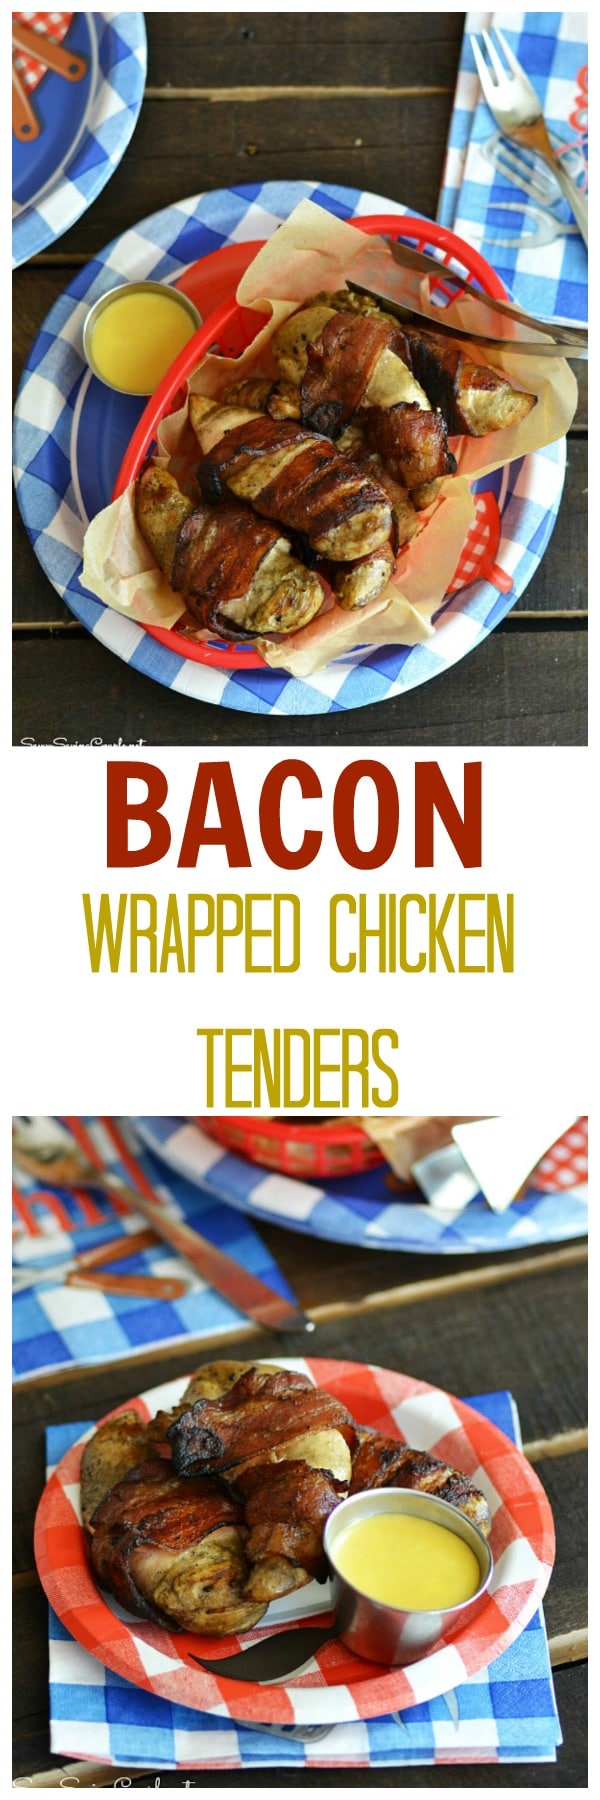 Bacon-wrapped-chicken-tenders-herojpg